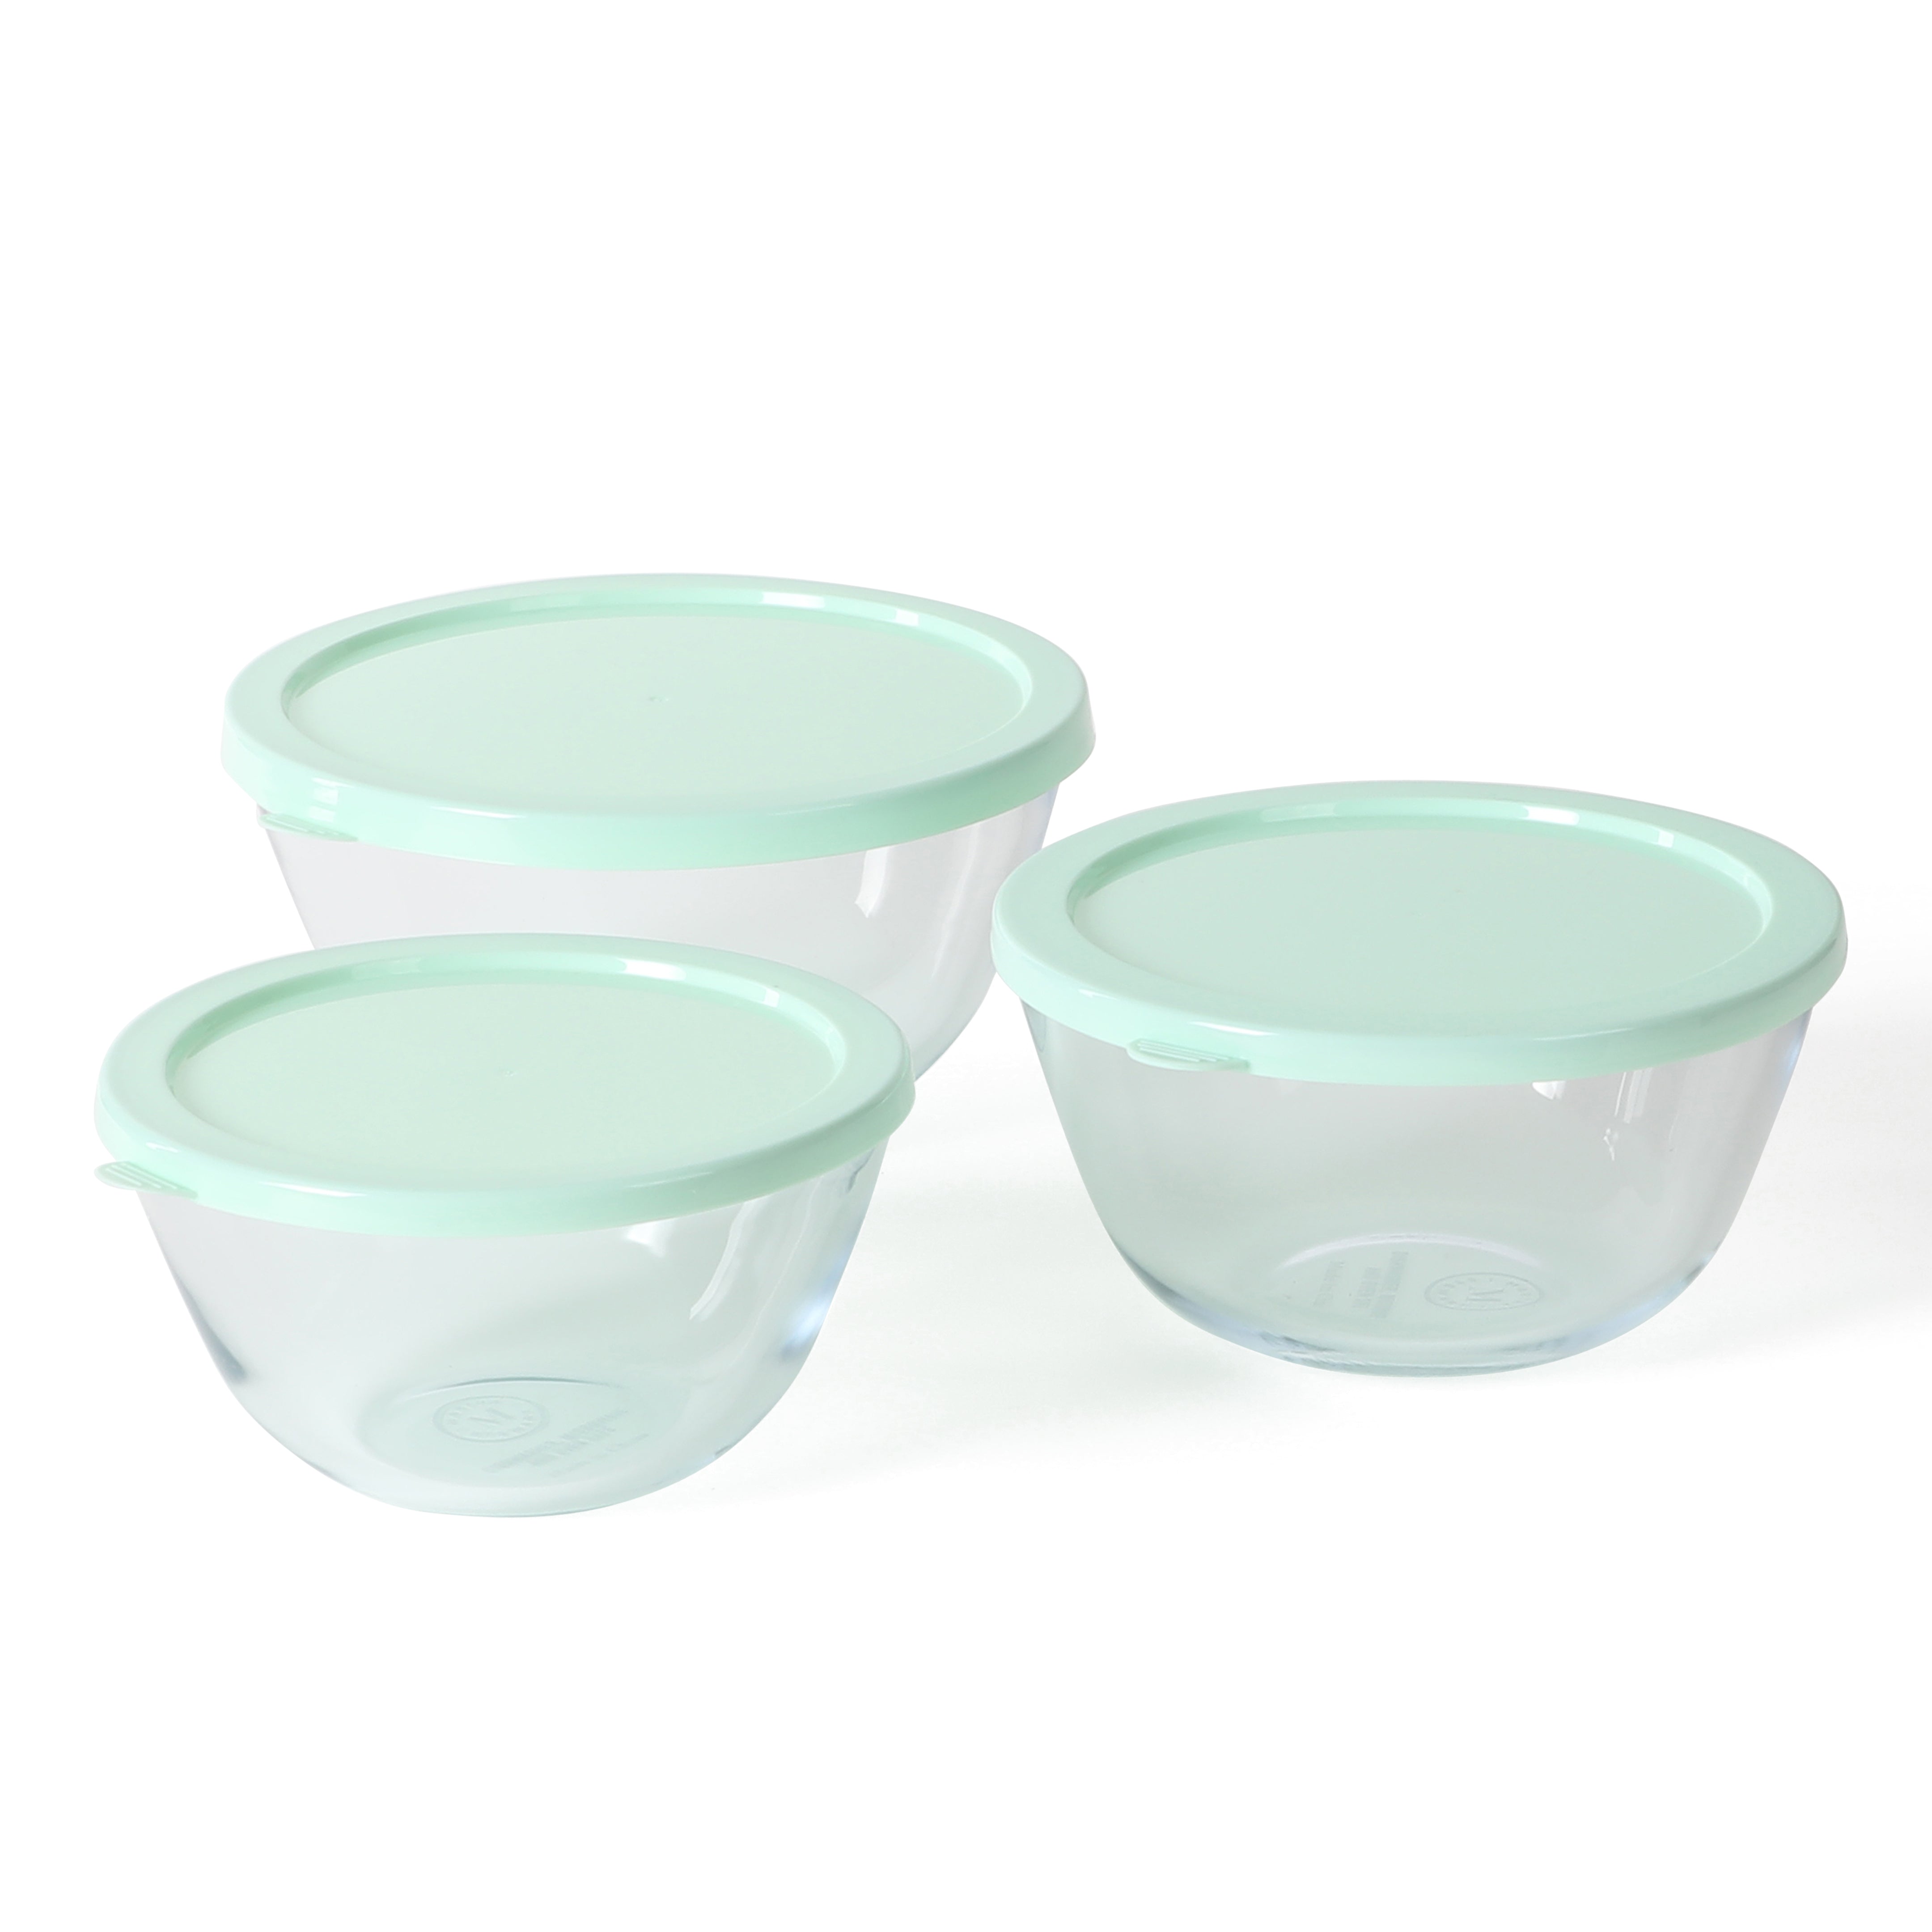 Borosilicate glass bowl with spout 7.5 x 7 h3.4 cm